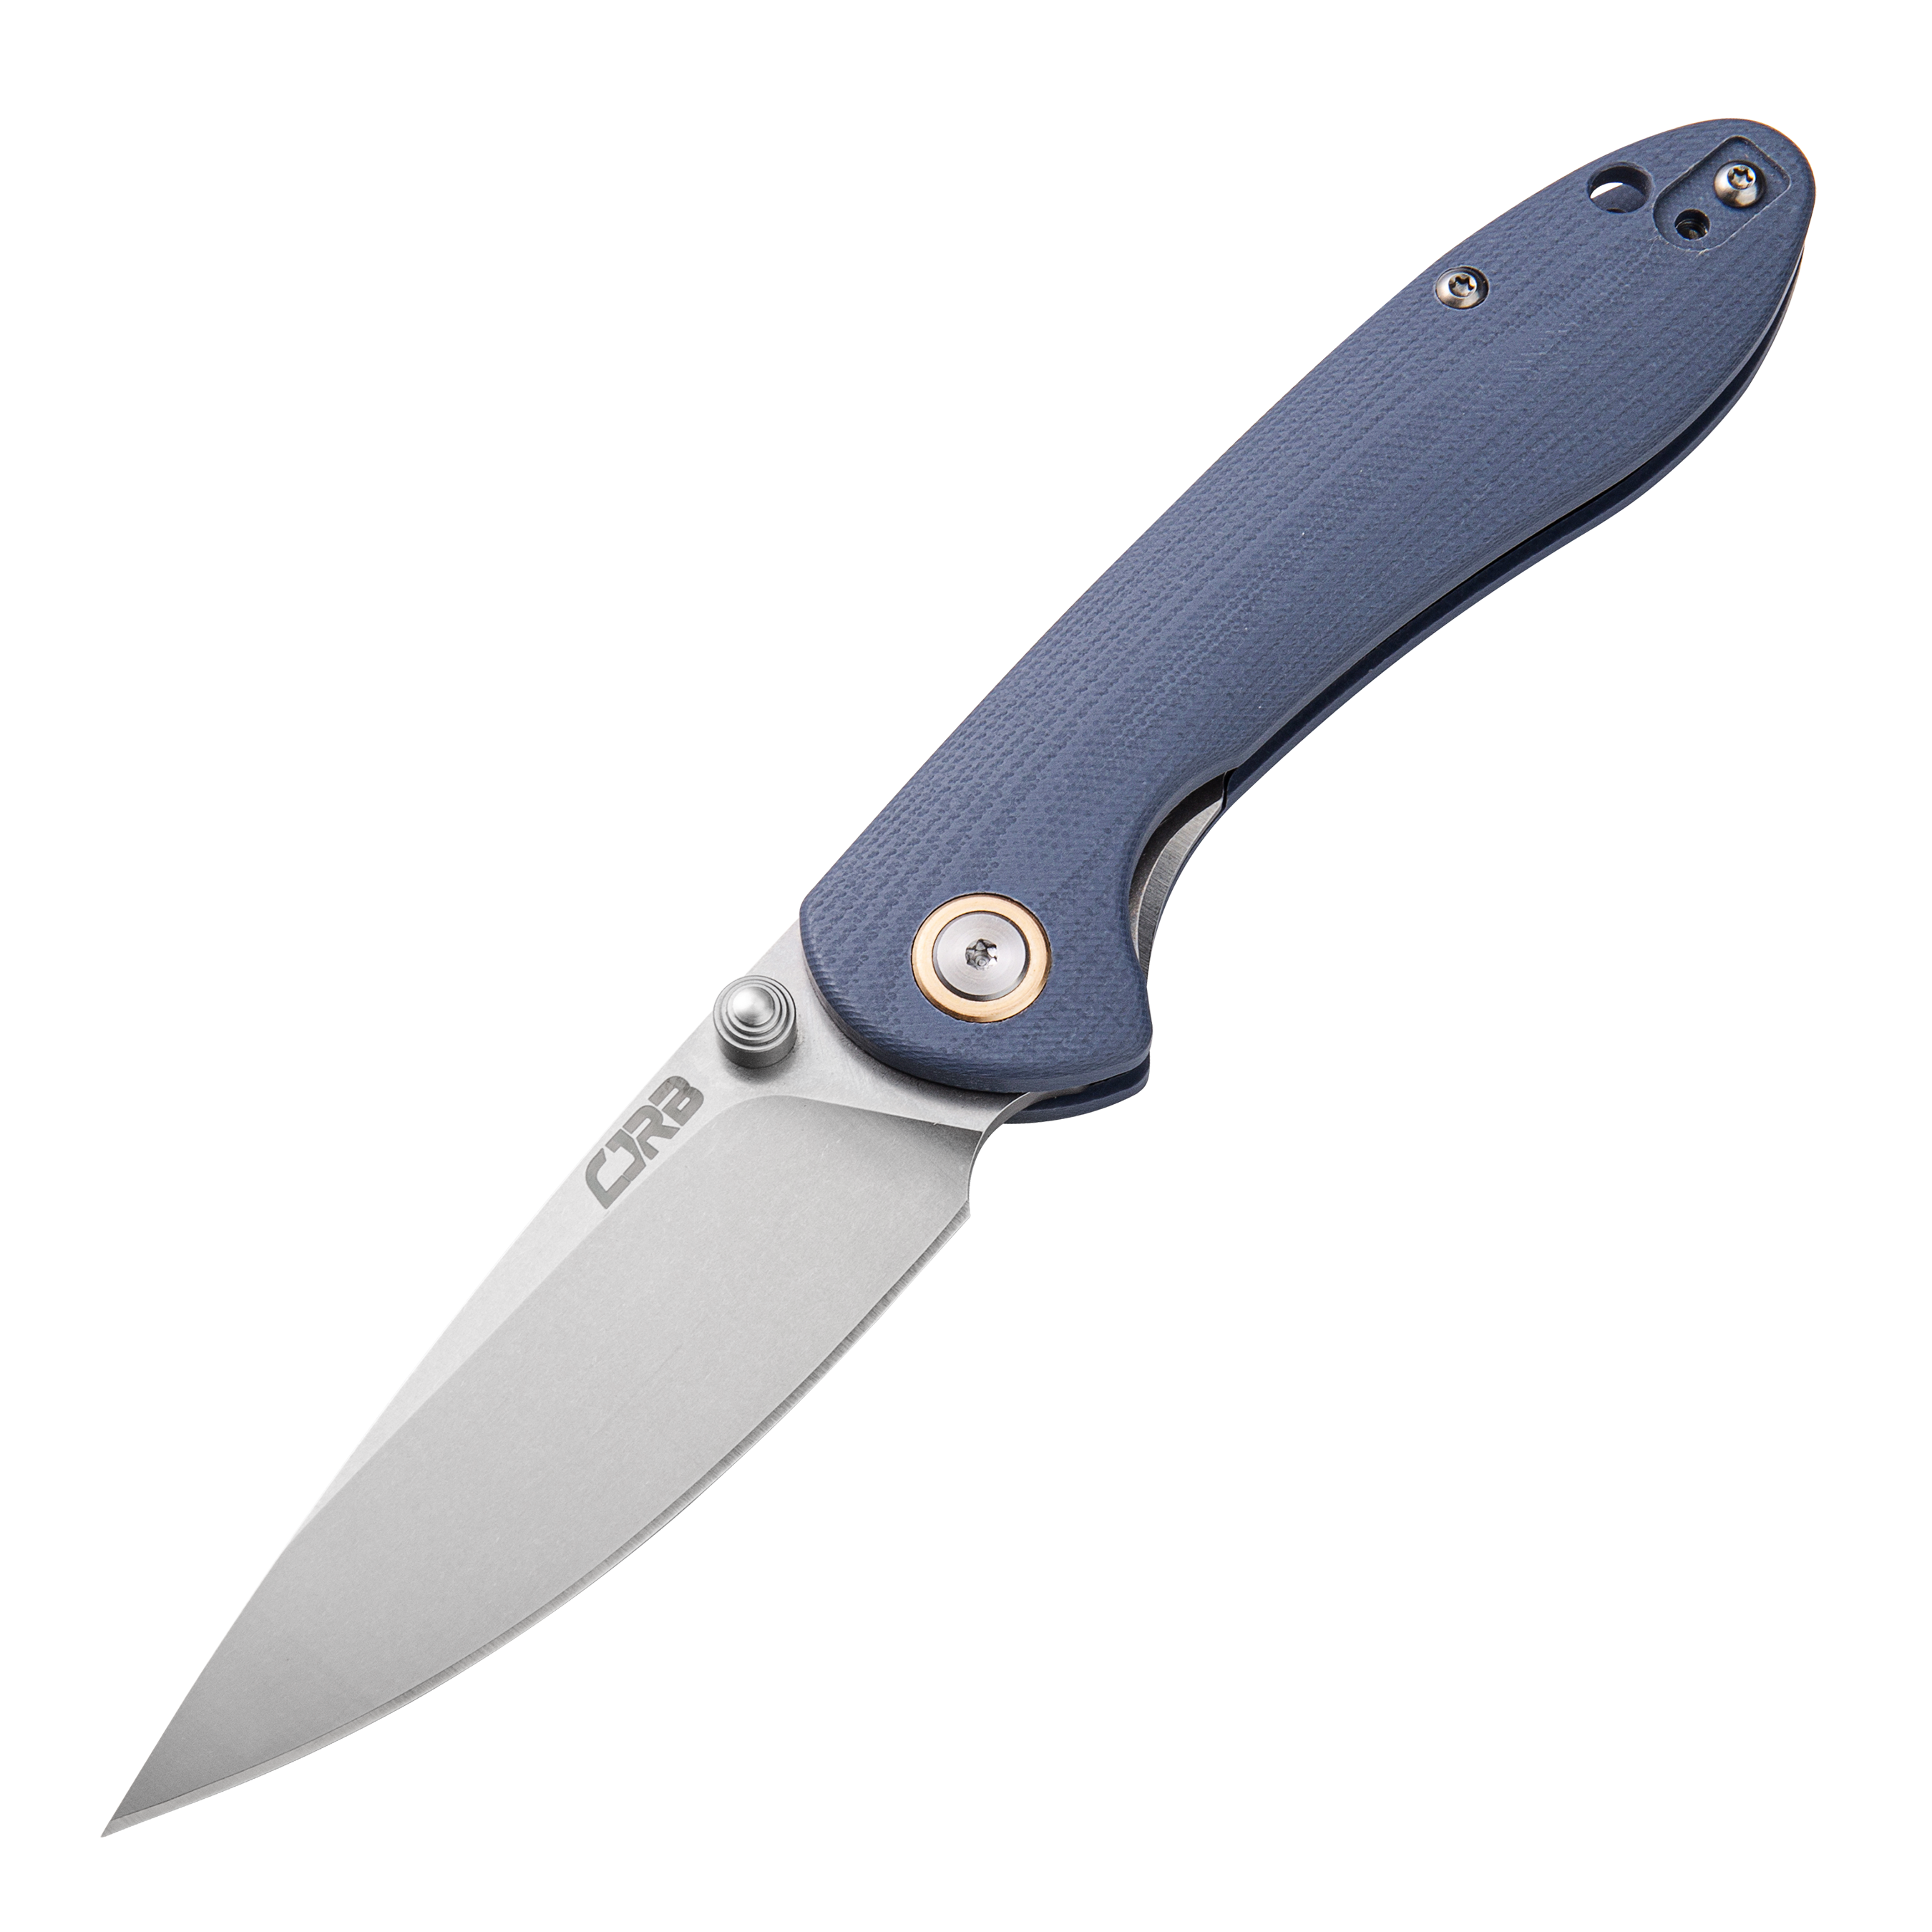 CJRB Feldspar J1912S D2 Blade G10(Contoured & Cnc Pattern Texture) Handle Folding Knives